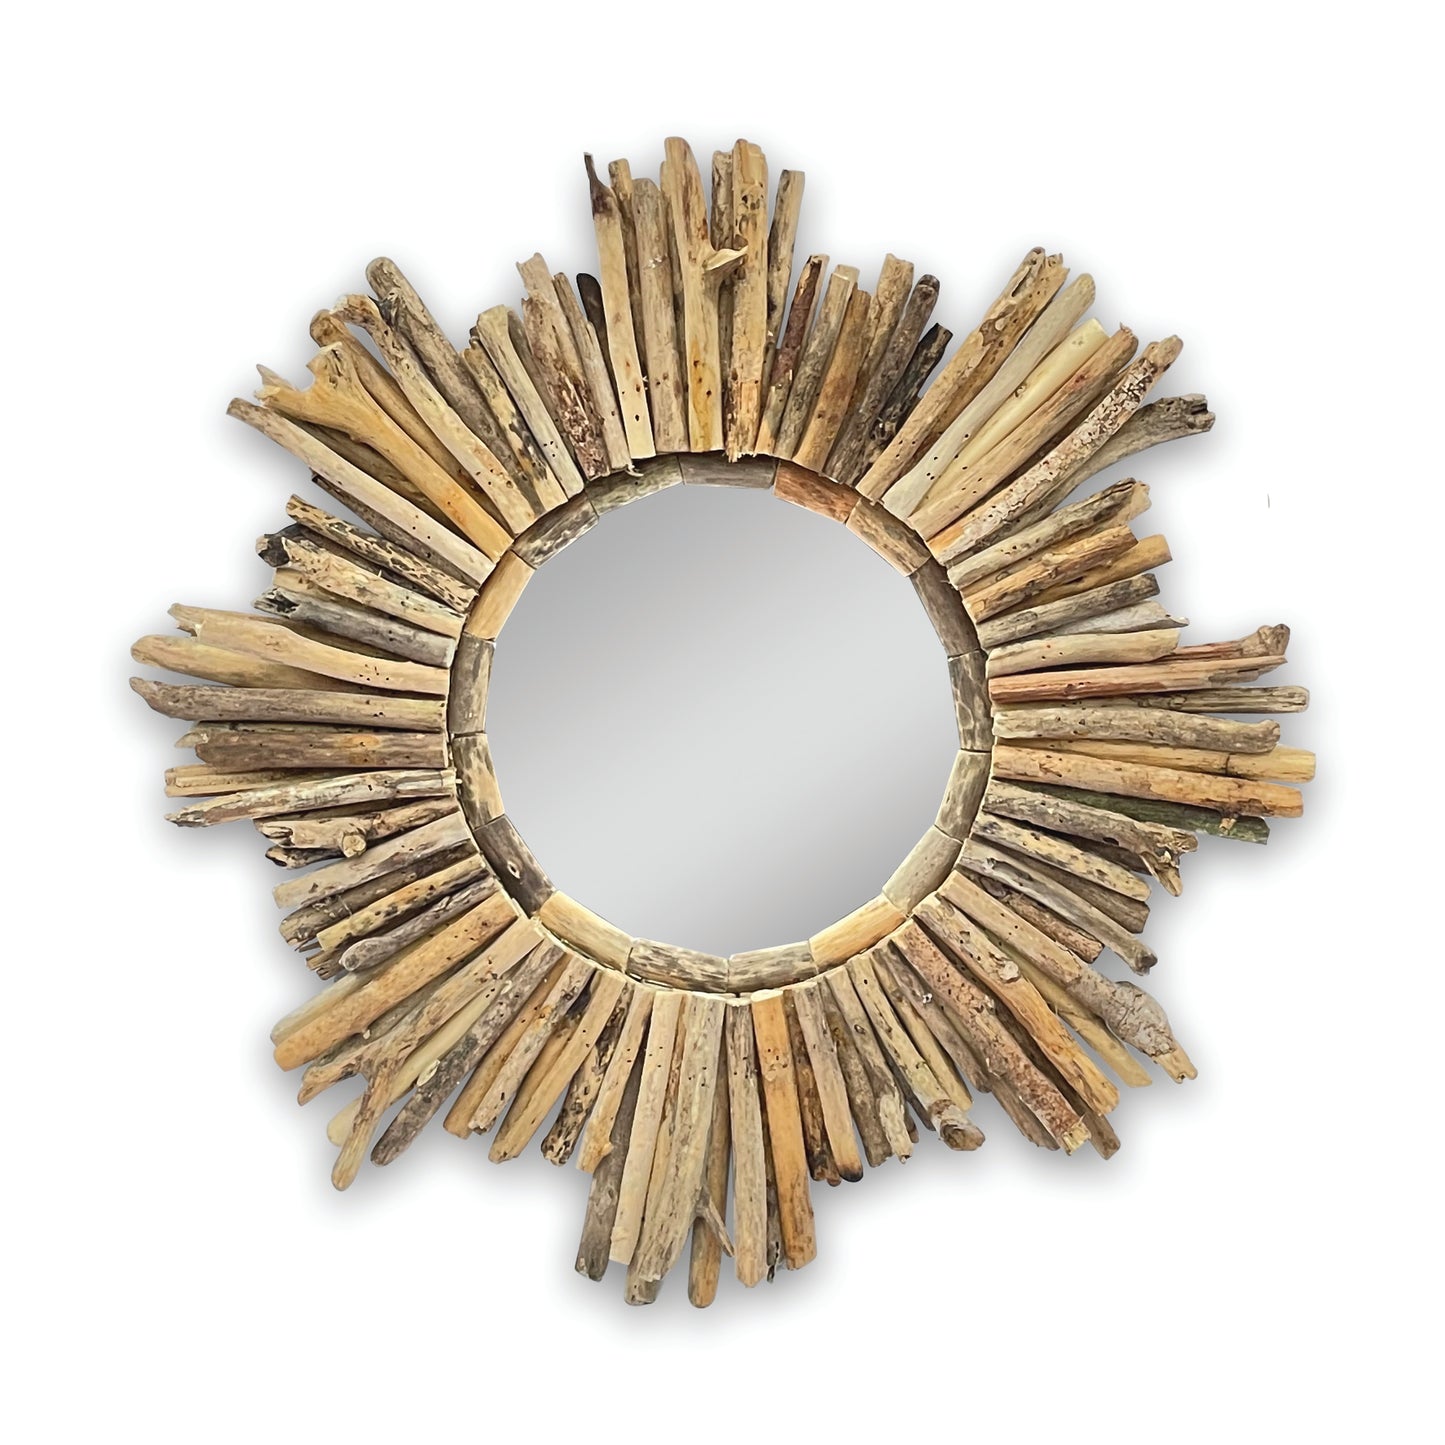 Driftwood Round Star Shaped Mirror 60cm Diameter